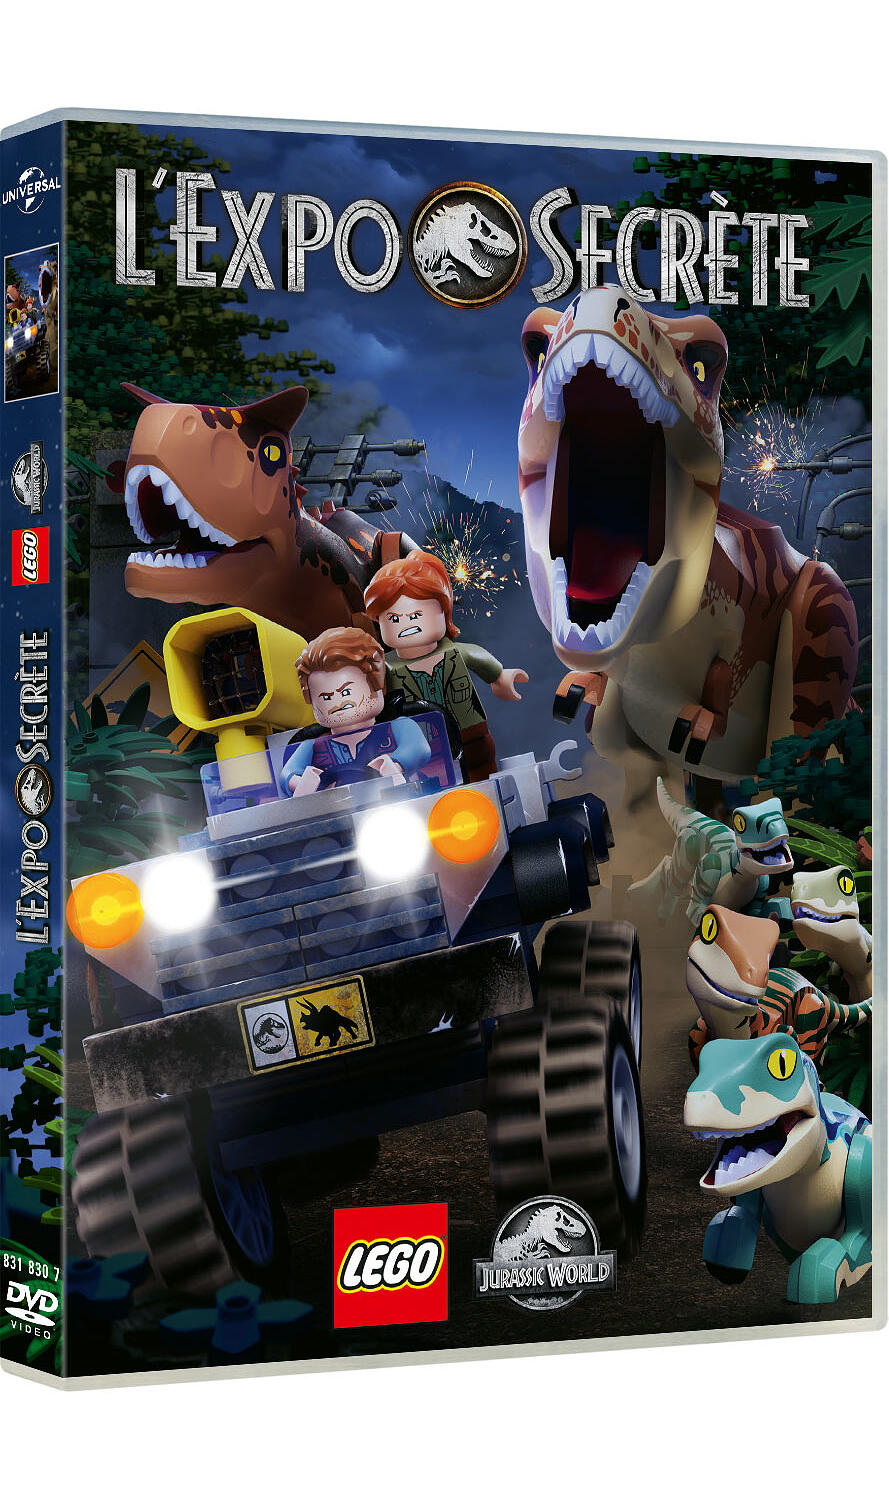 Couverture de : LEGO Jurassic World : L'expo secrète